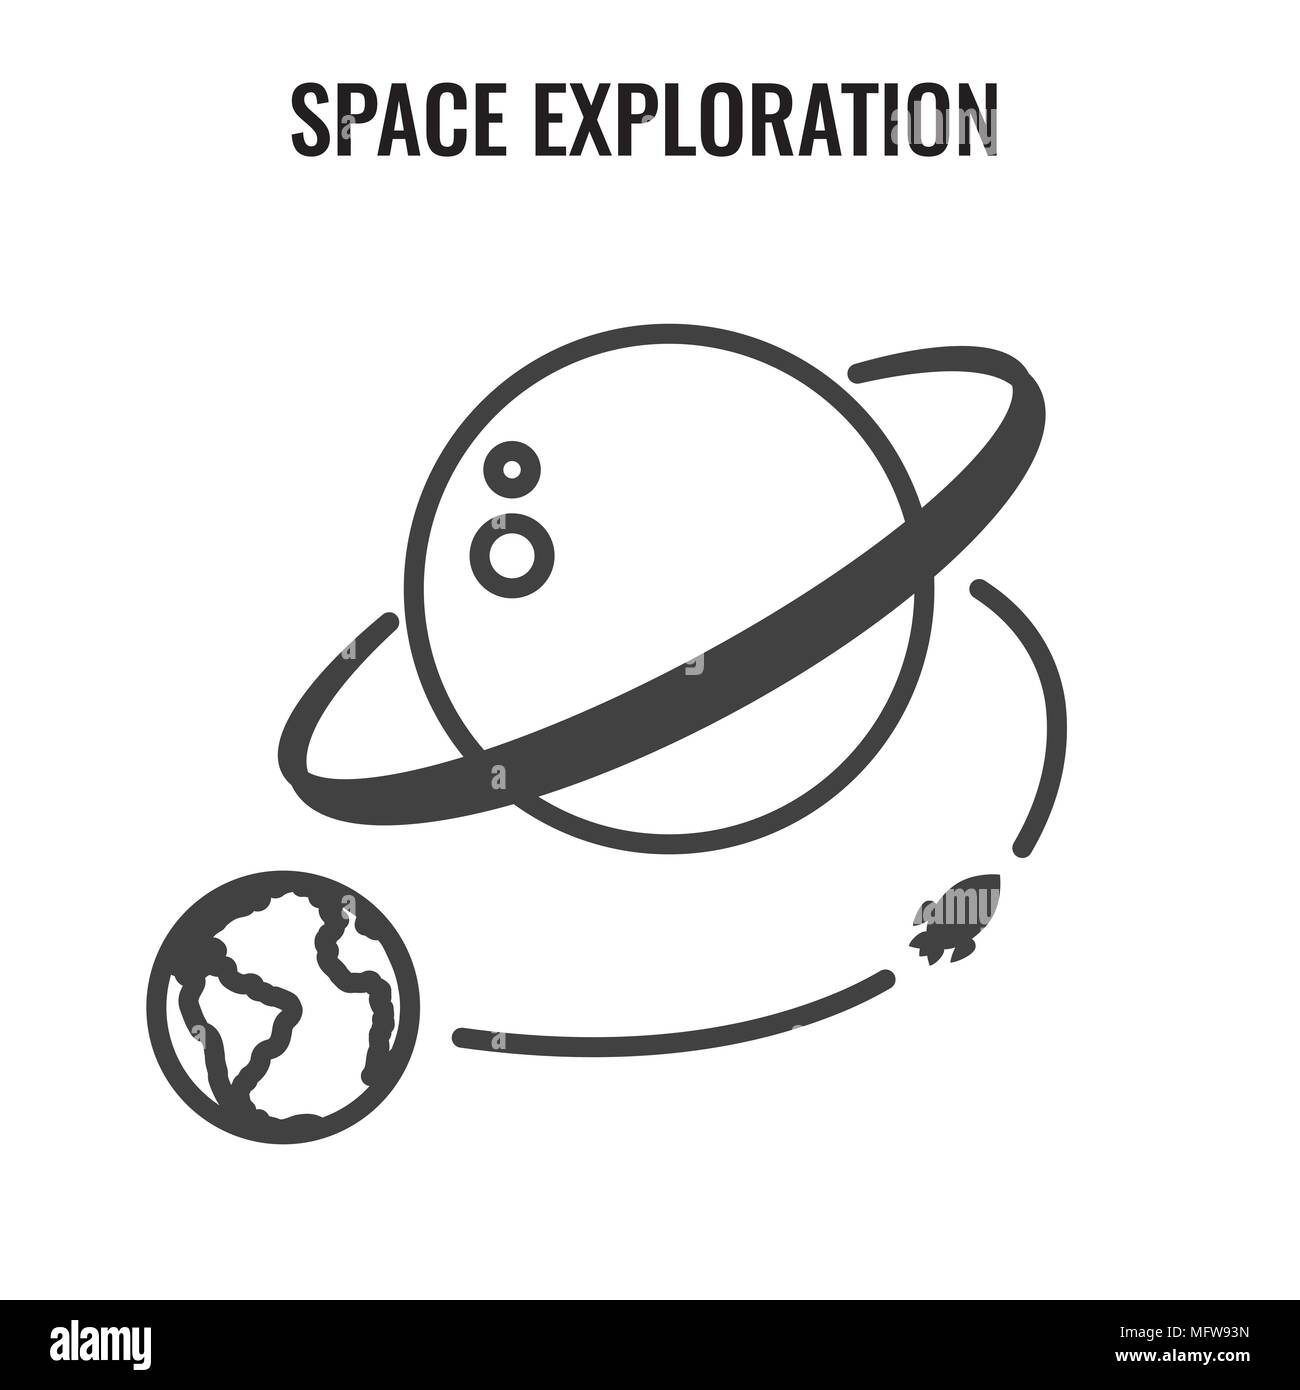 Raumfahrt Symbol w Planeten - Tourismus in den Weltraum - Exploration Astrotourism Stock Vektor